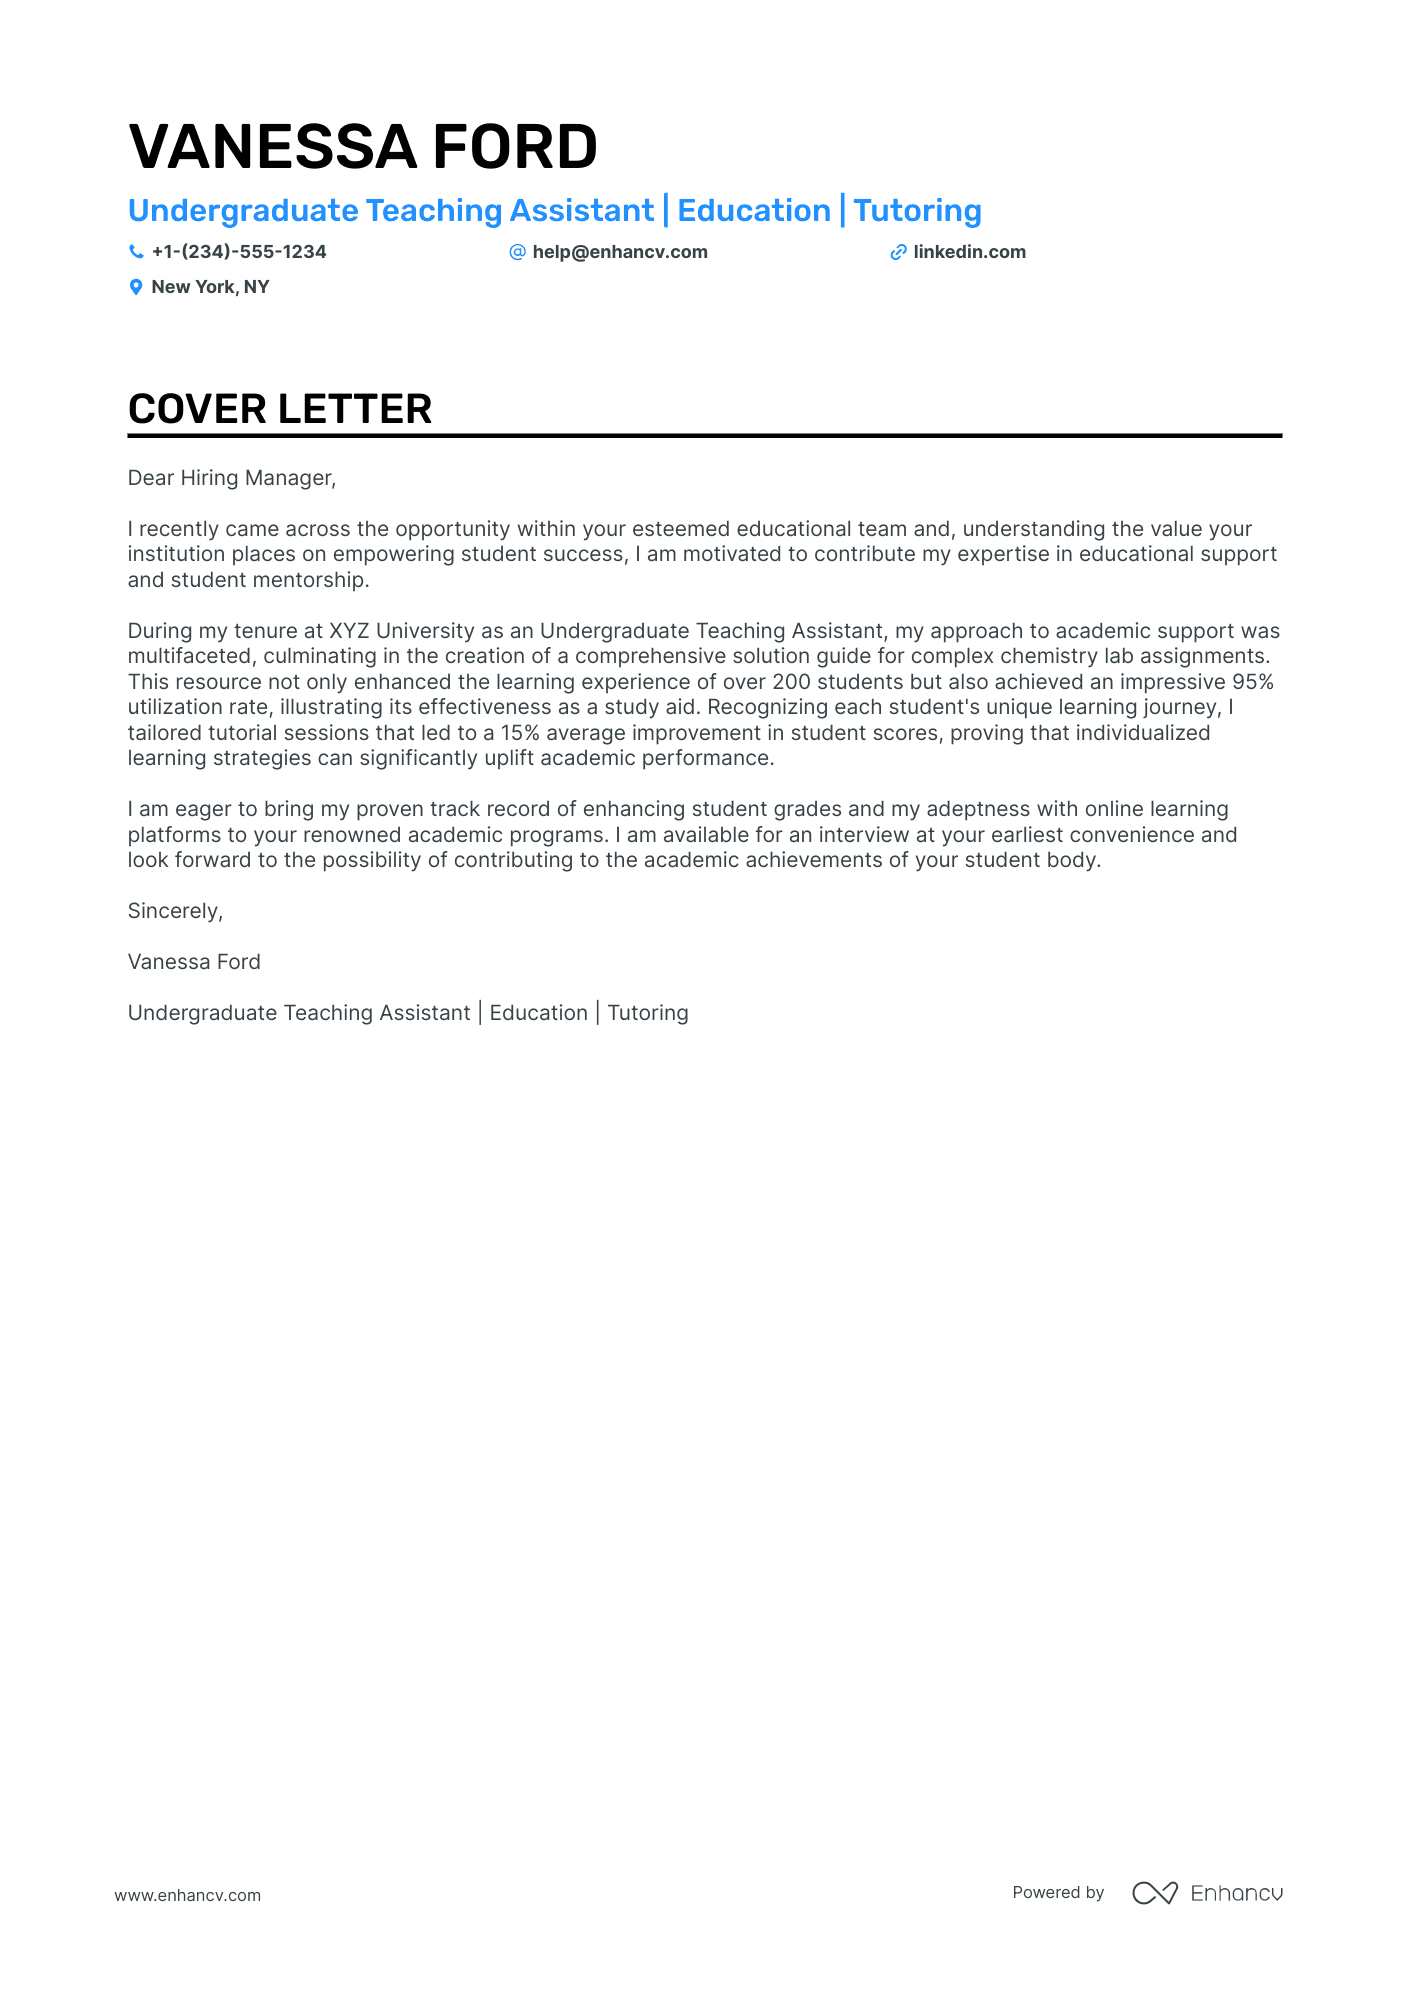 Undergraduate Teaching Assistant cover letter